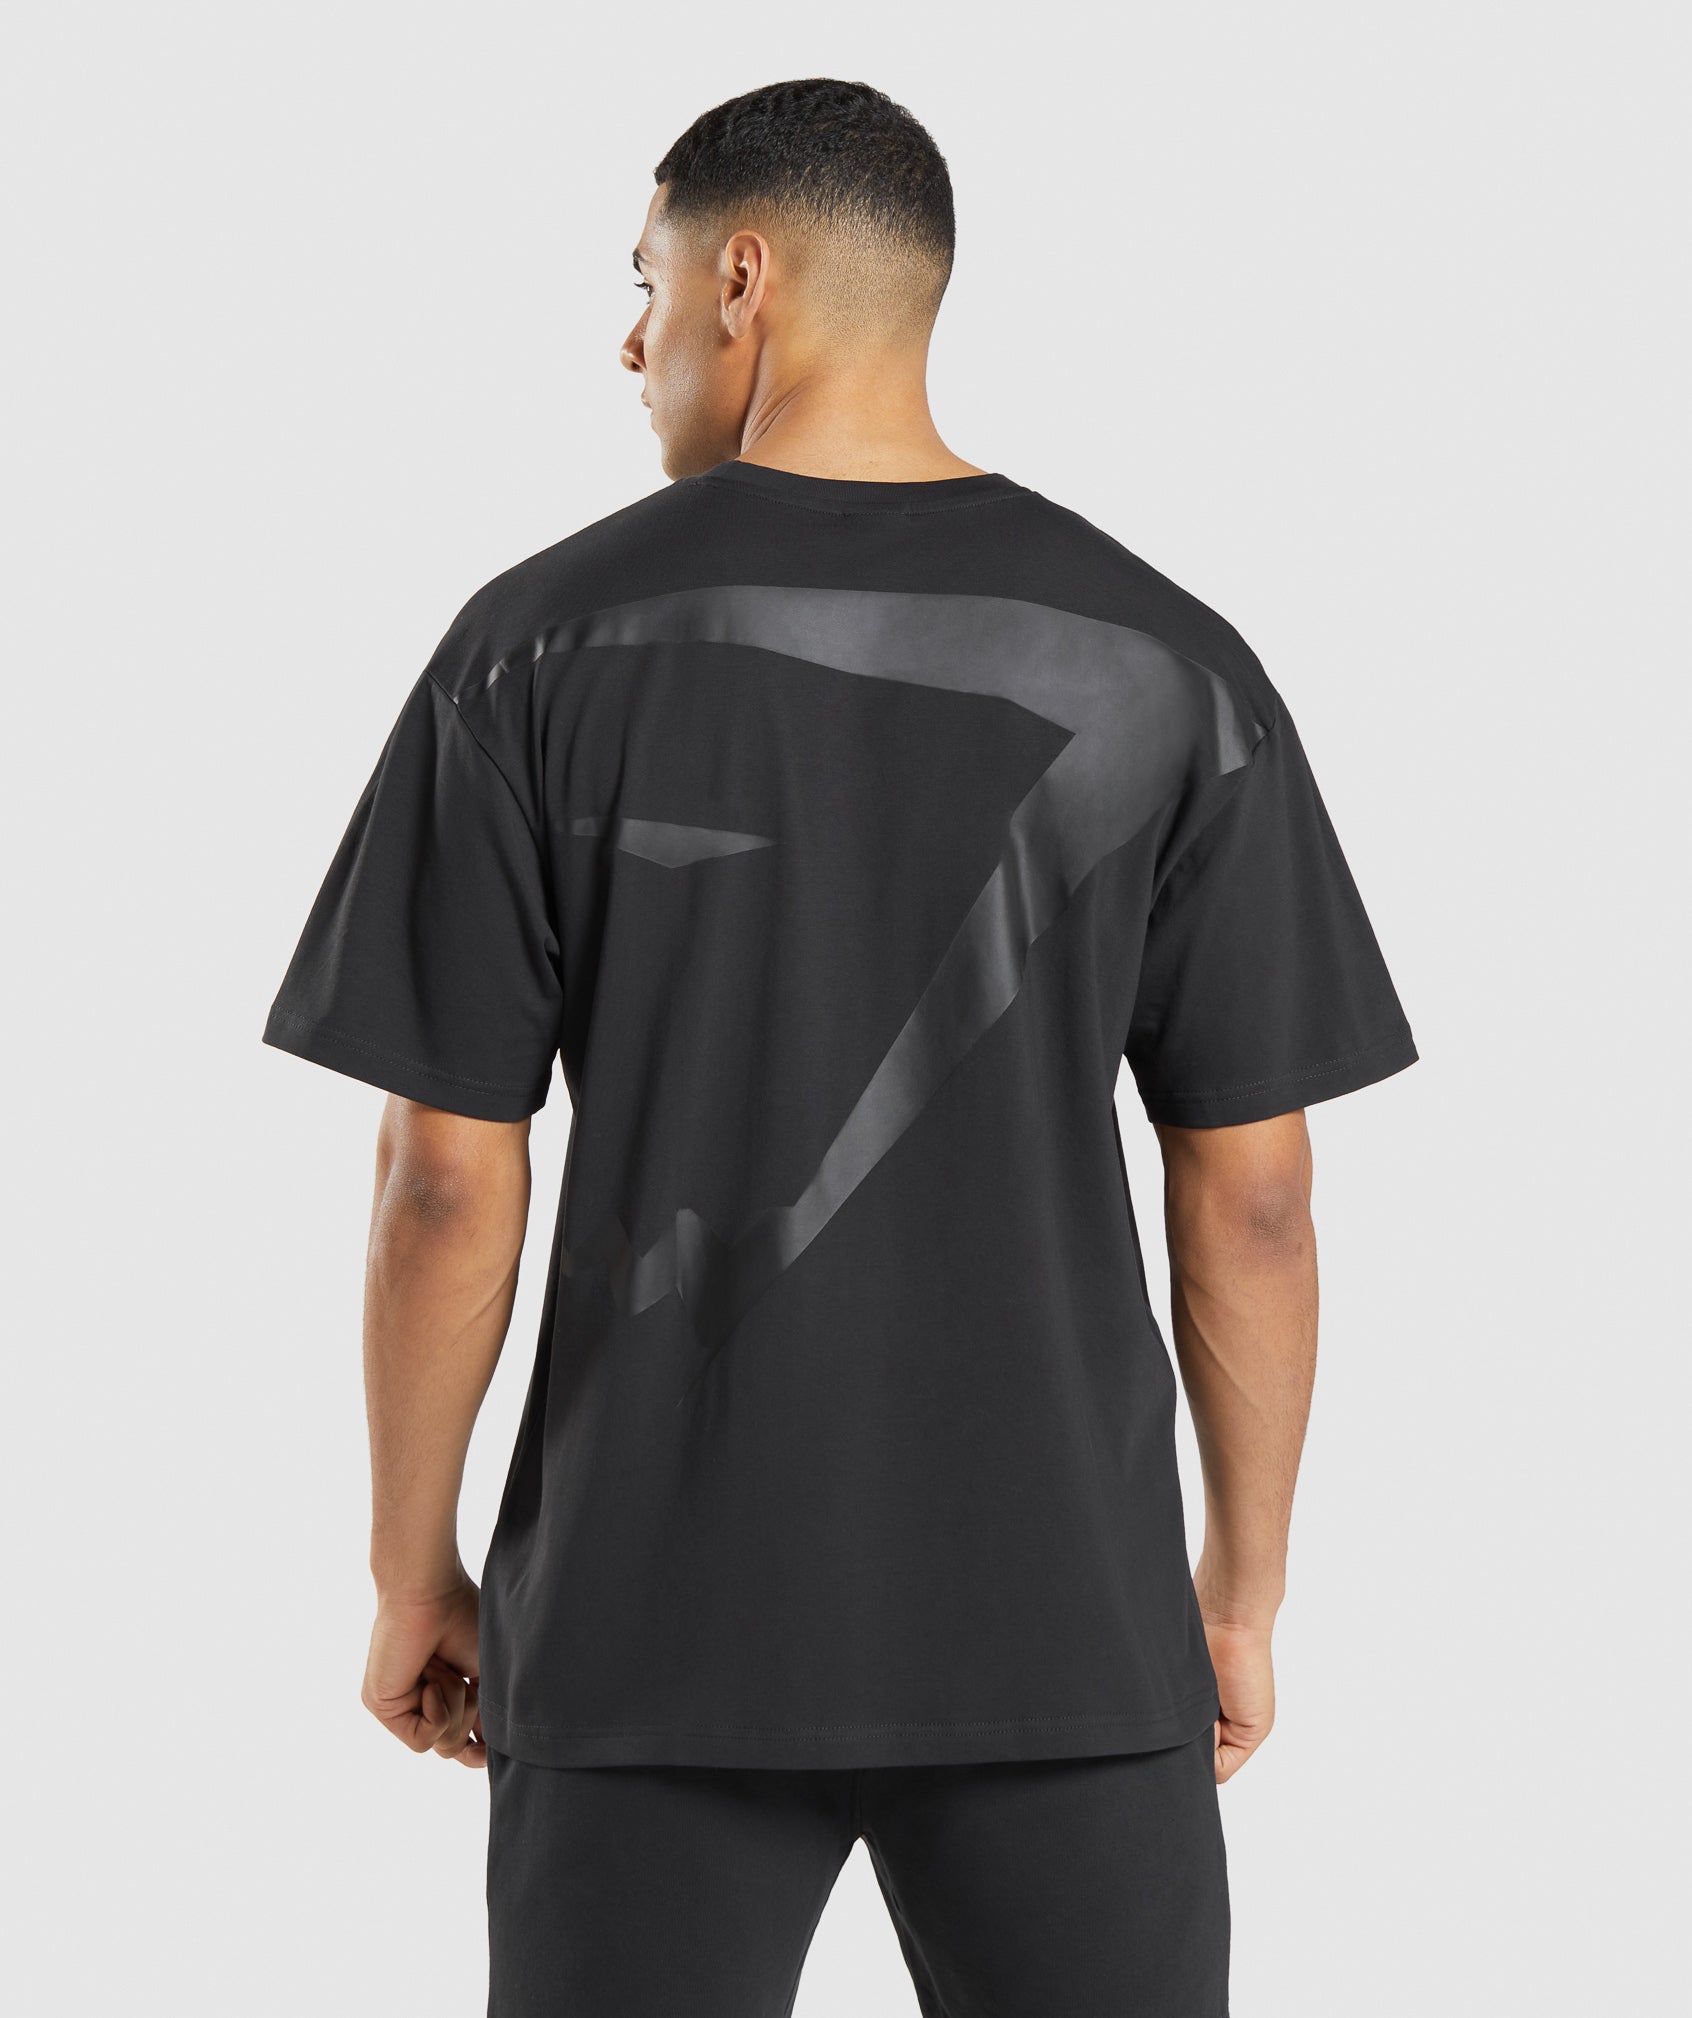 Camiseta Gymshark Hombre Venta En Linea - Sports Negros